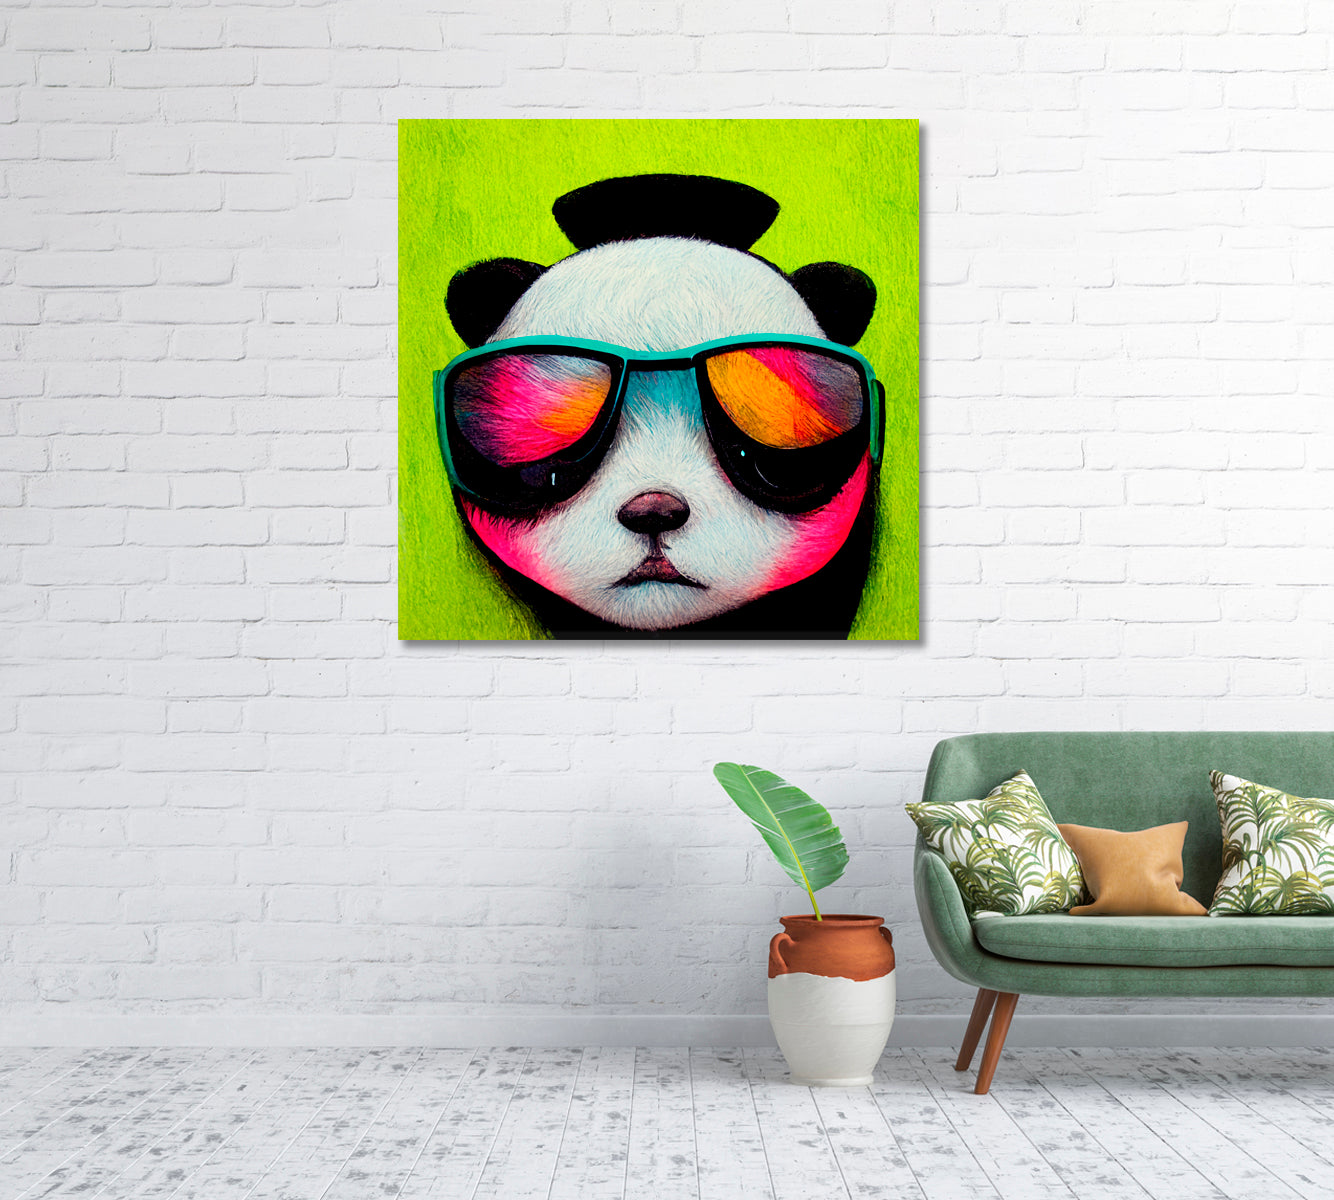 Hipster Panda in Sunglasses Art Print-Canvas Print-CetArt-1 panel-12x12 inches-CetArt